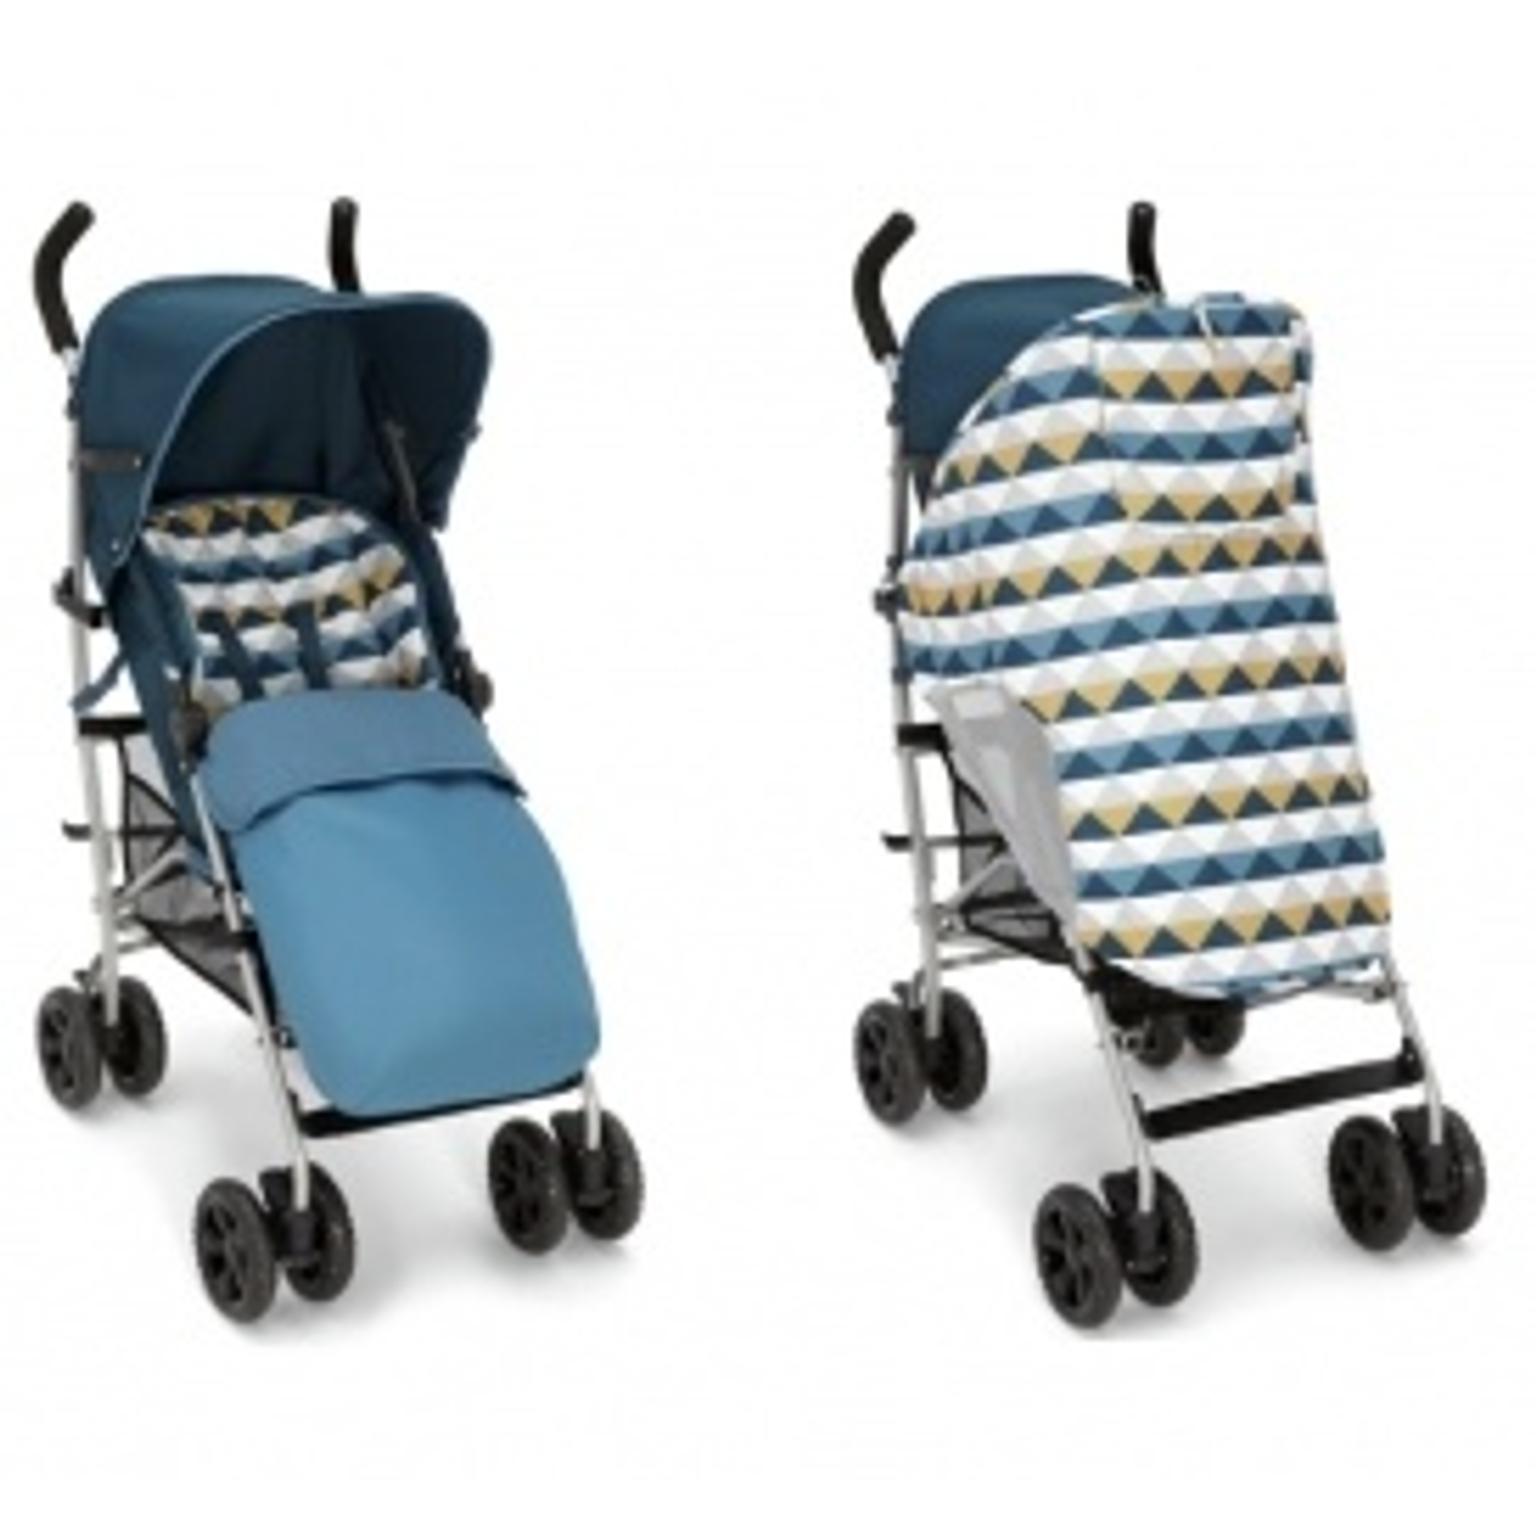 mamas and papas swirl stroller